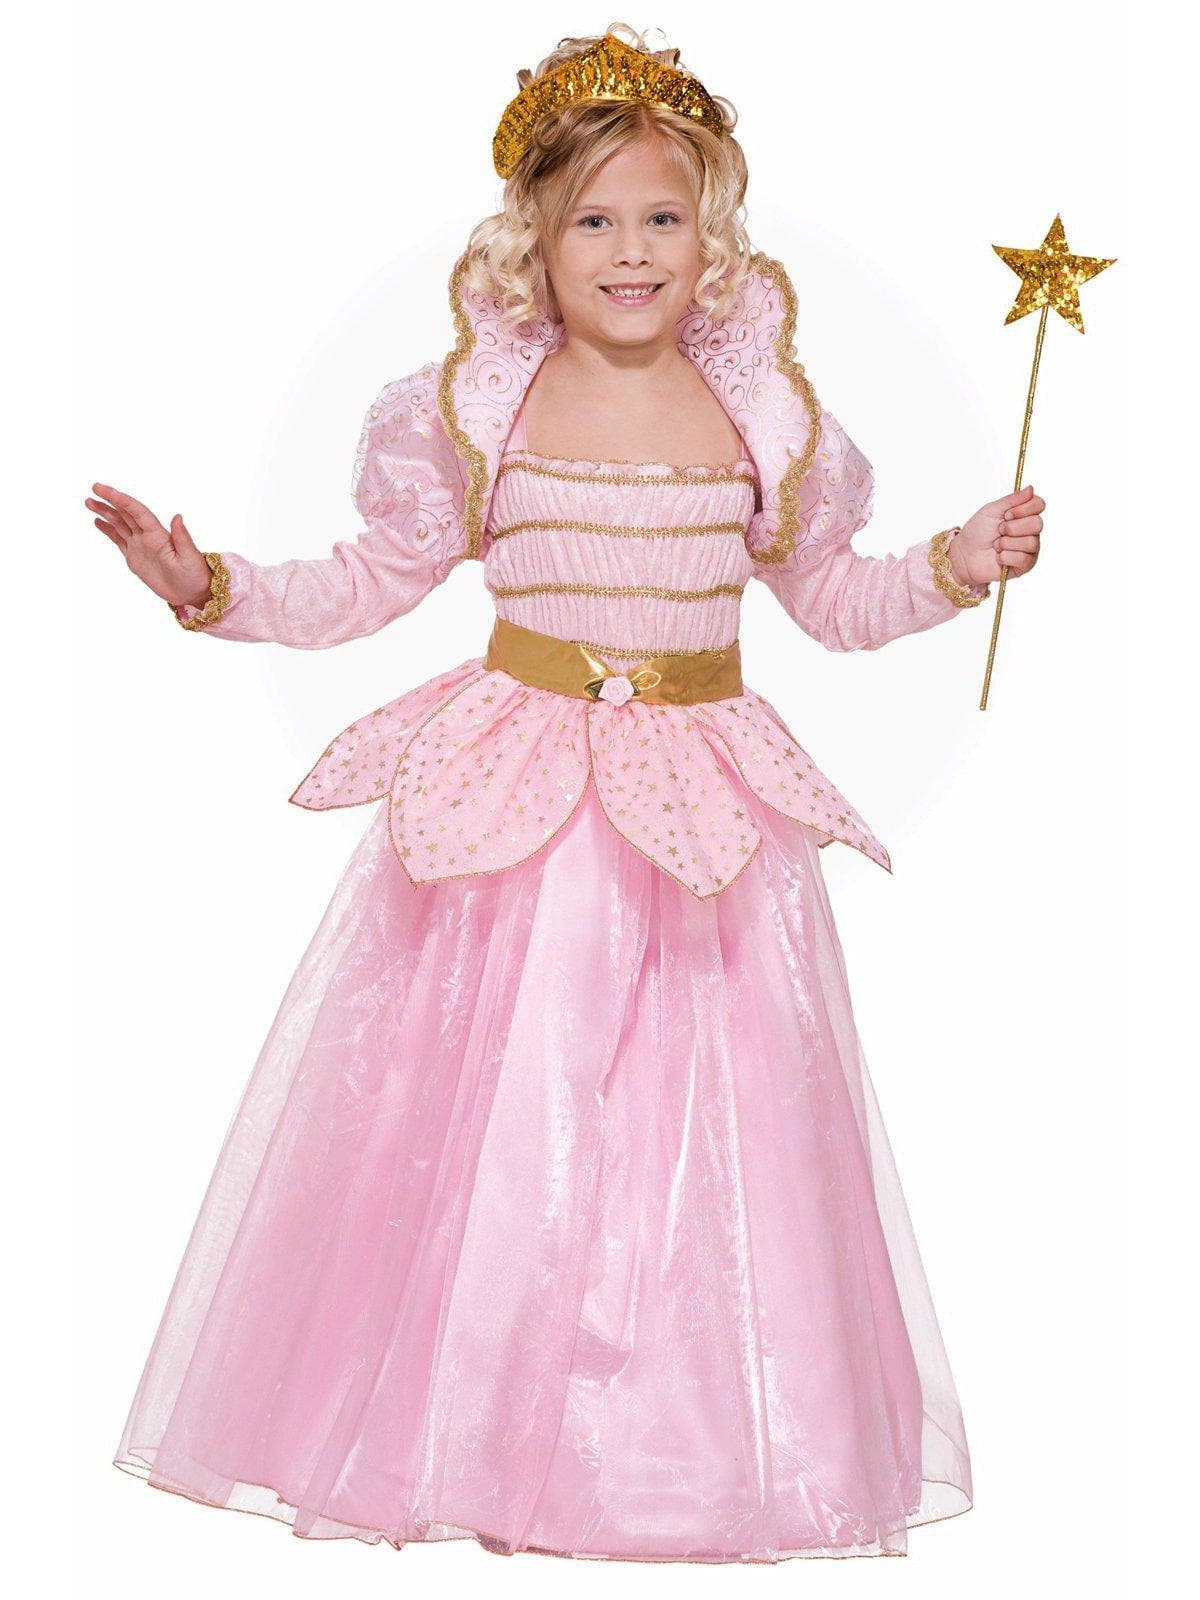 Kid's Little Pink Princess Costume - costumes.com